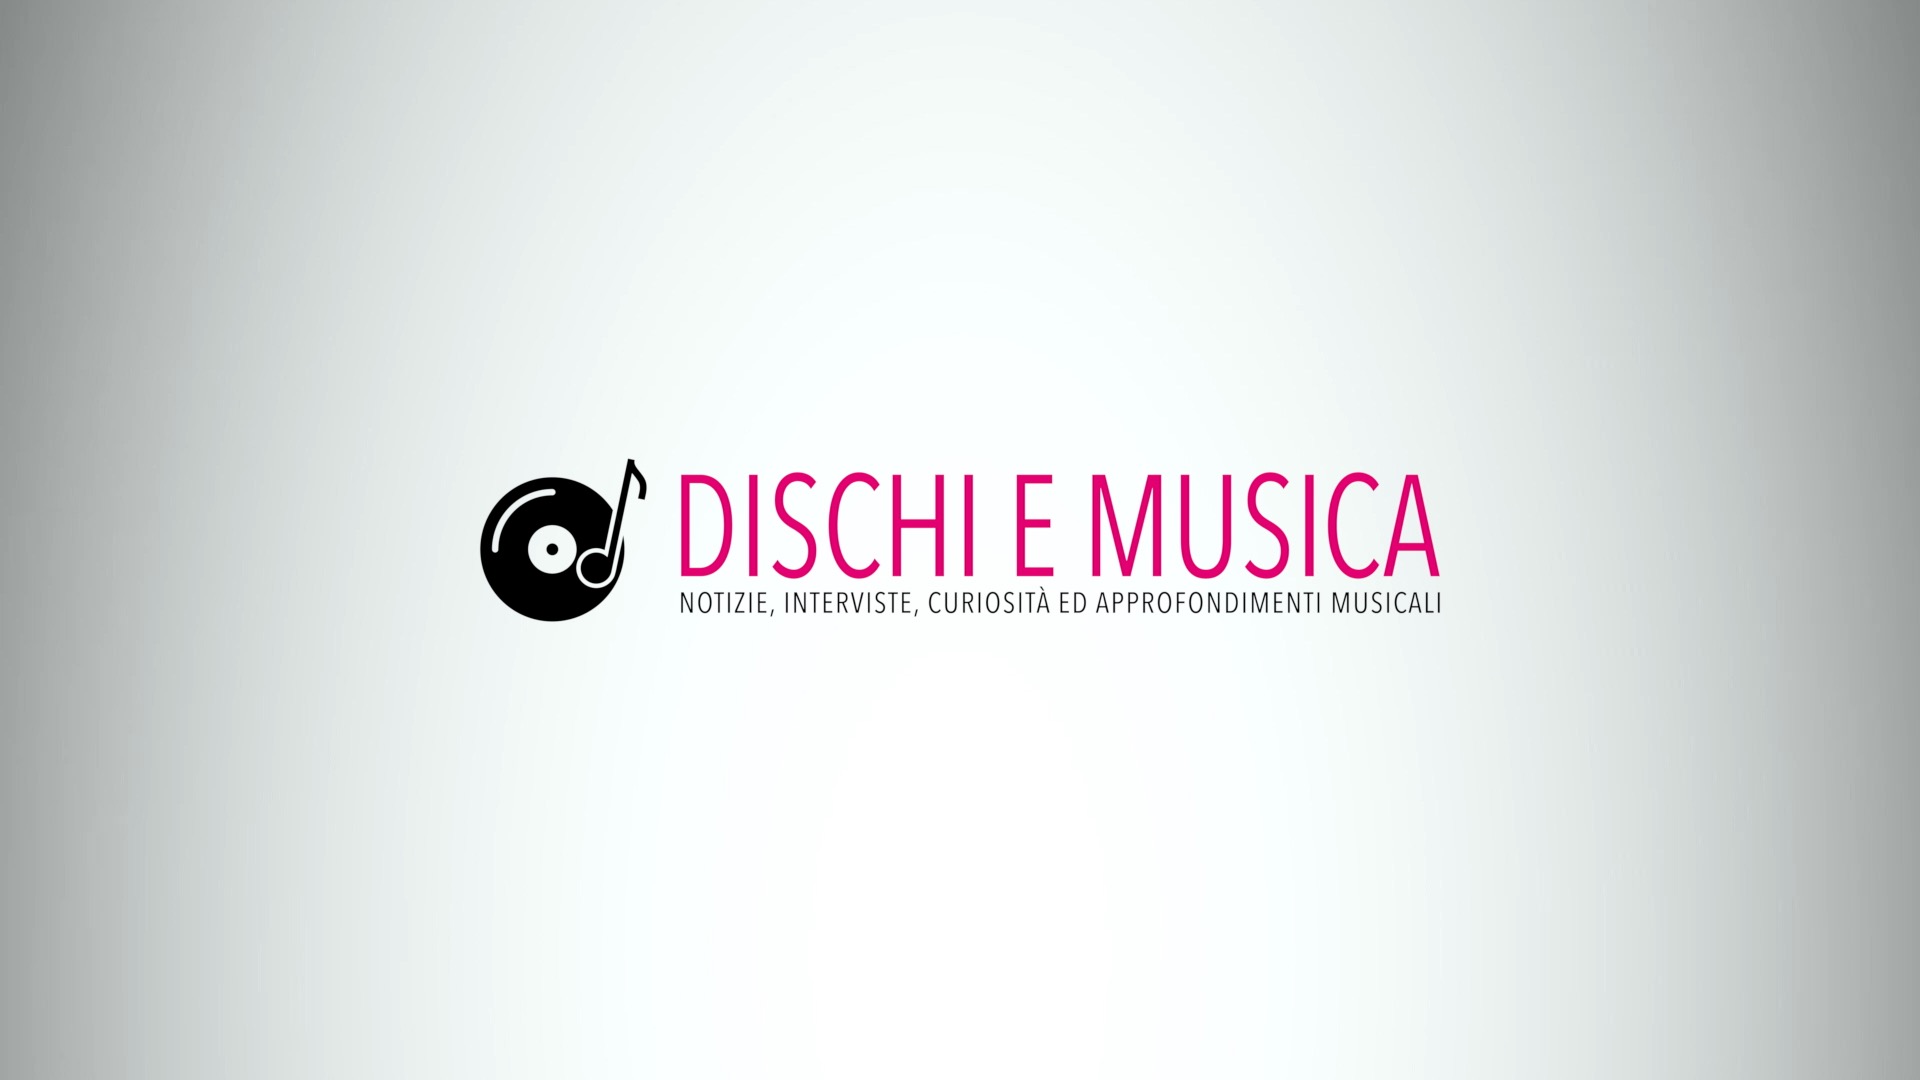 Dischi e Musica - Let's work together